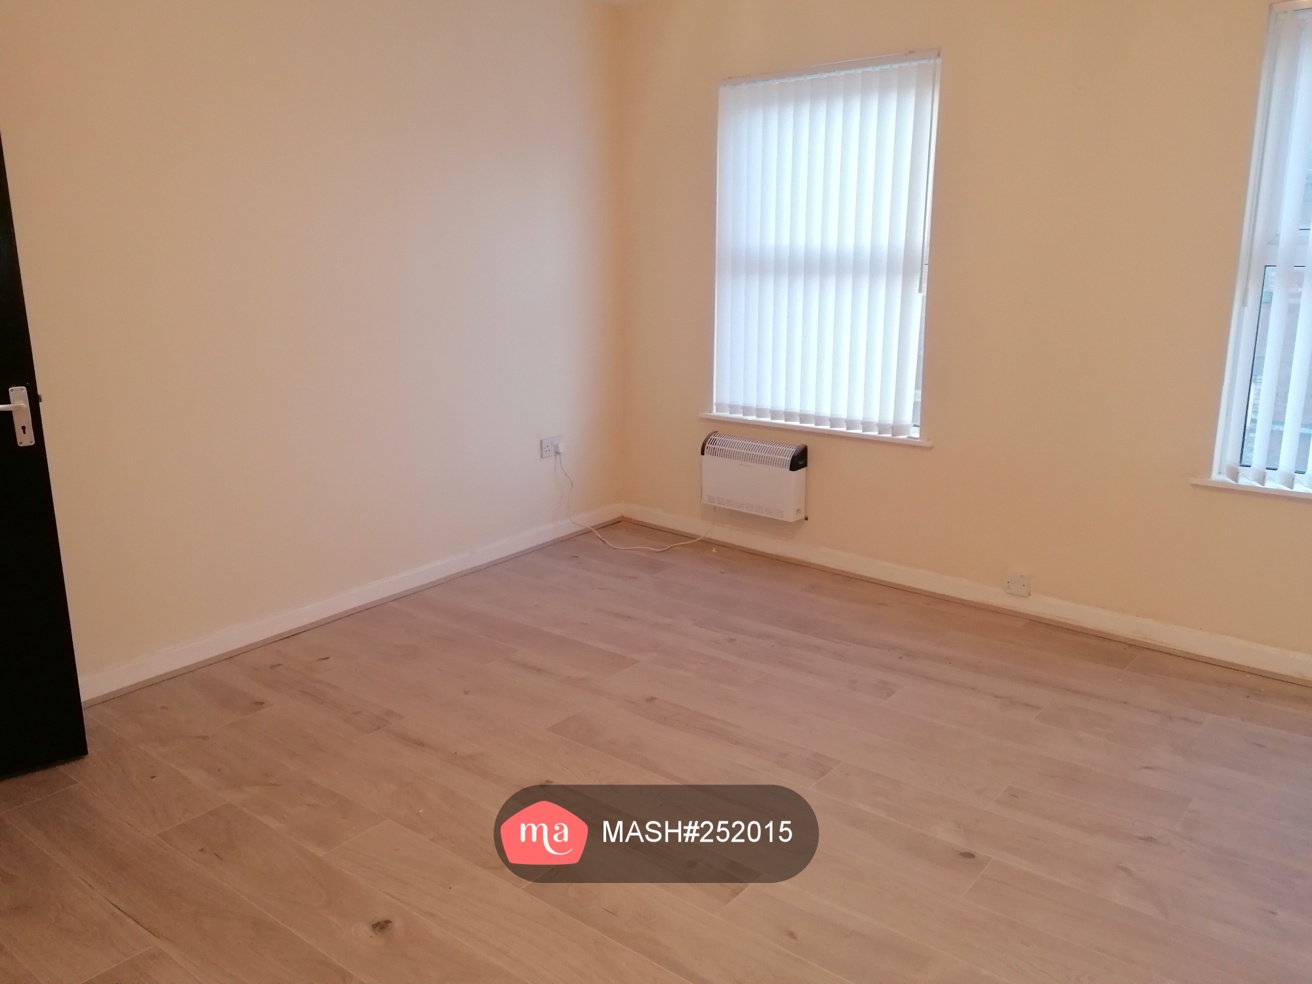 1 Bedroom Flat to rent in Liverpool - Mashroom